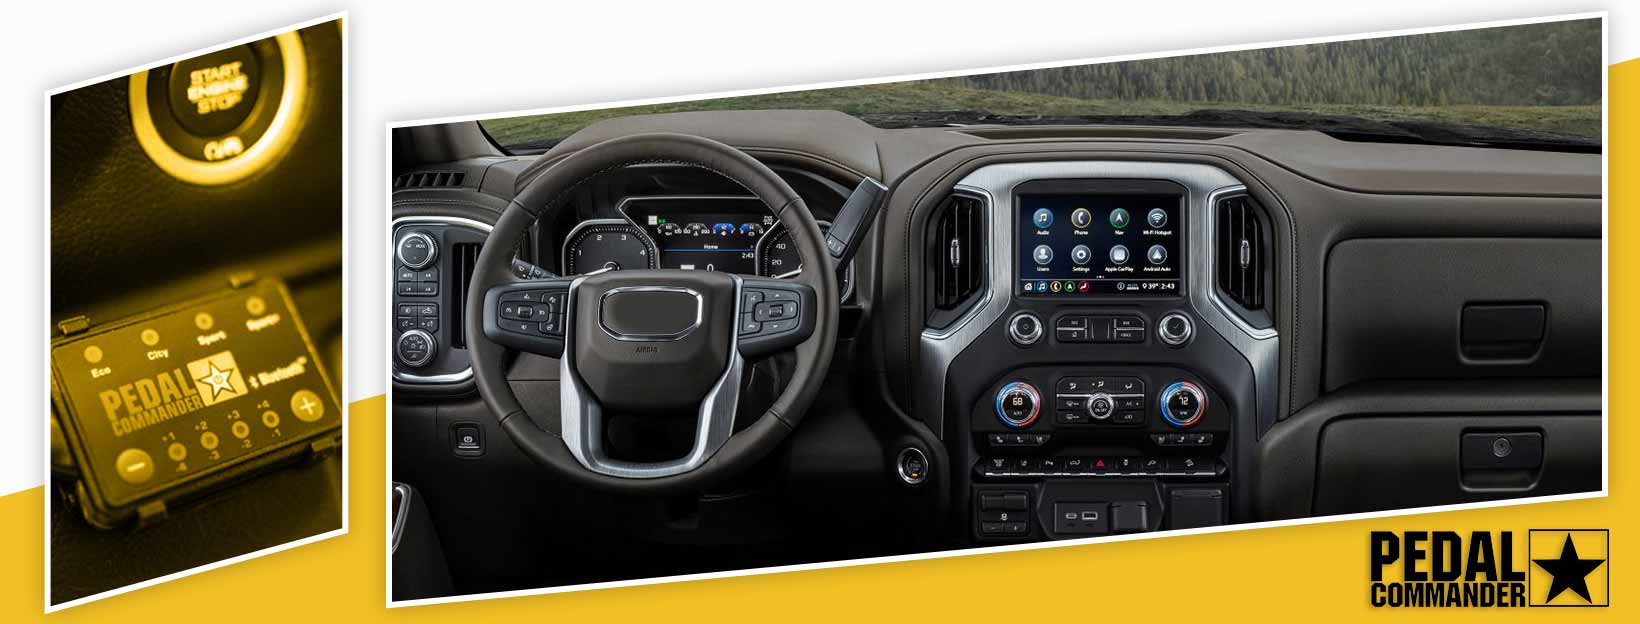 Pedal Commander for GMC Sierra 2500HD - interior